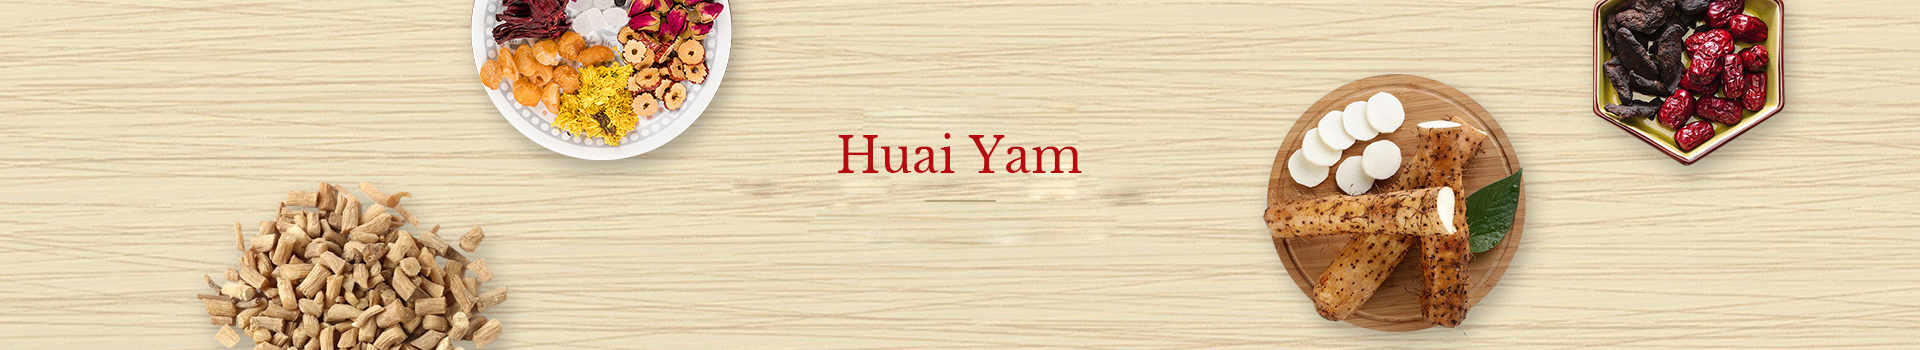 Huai Yam